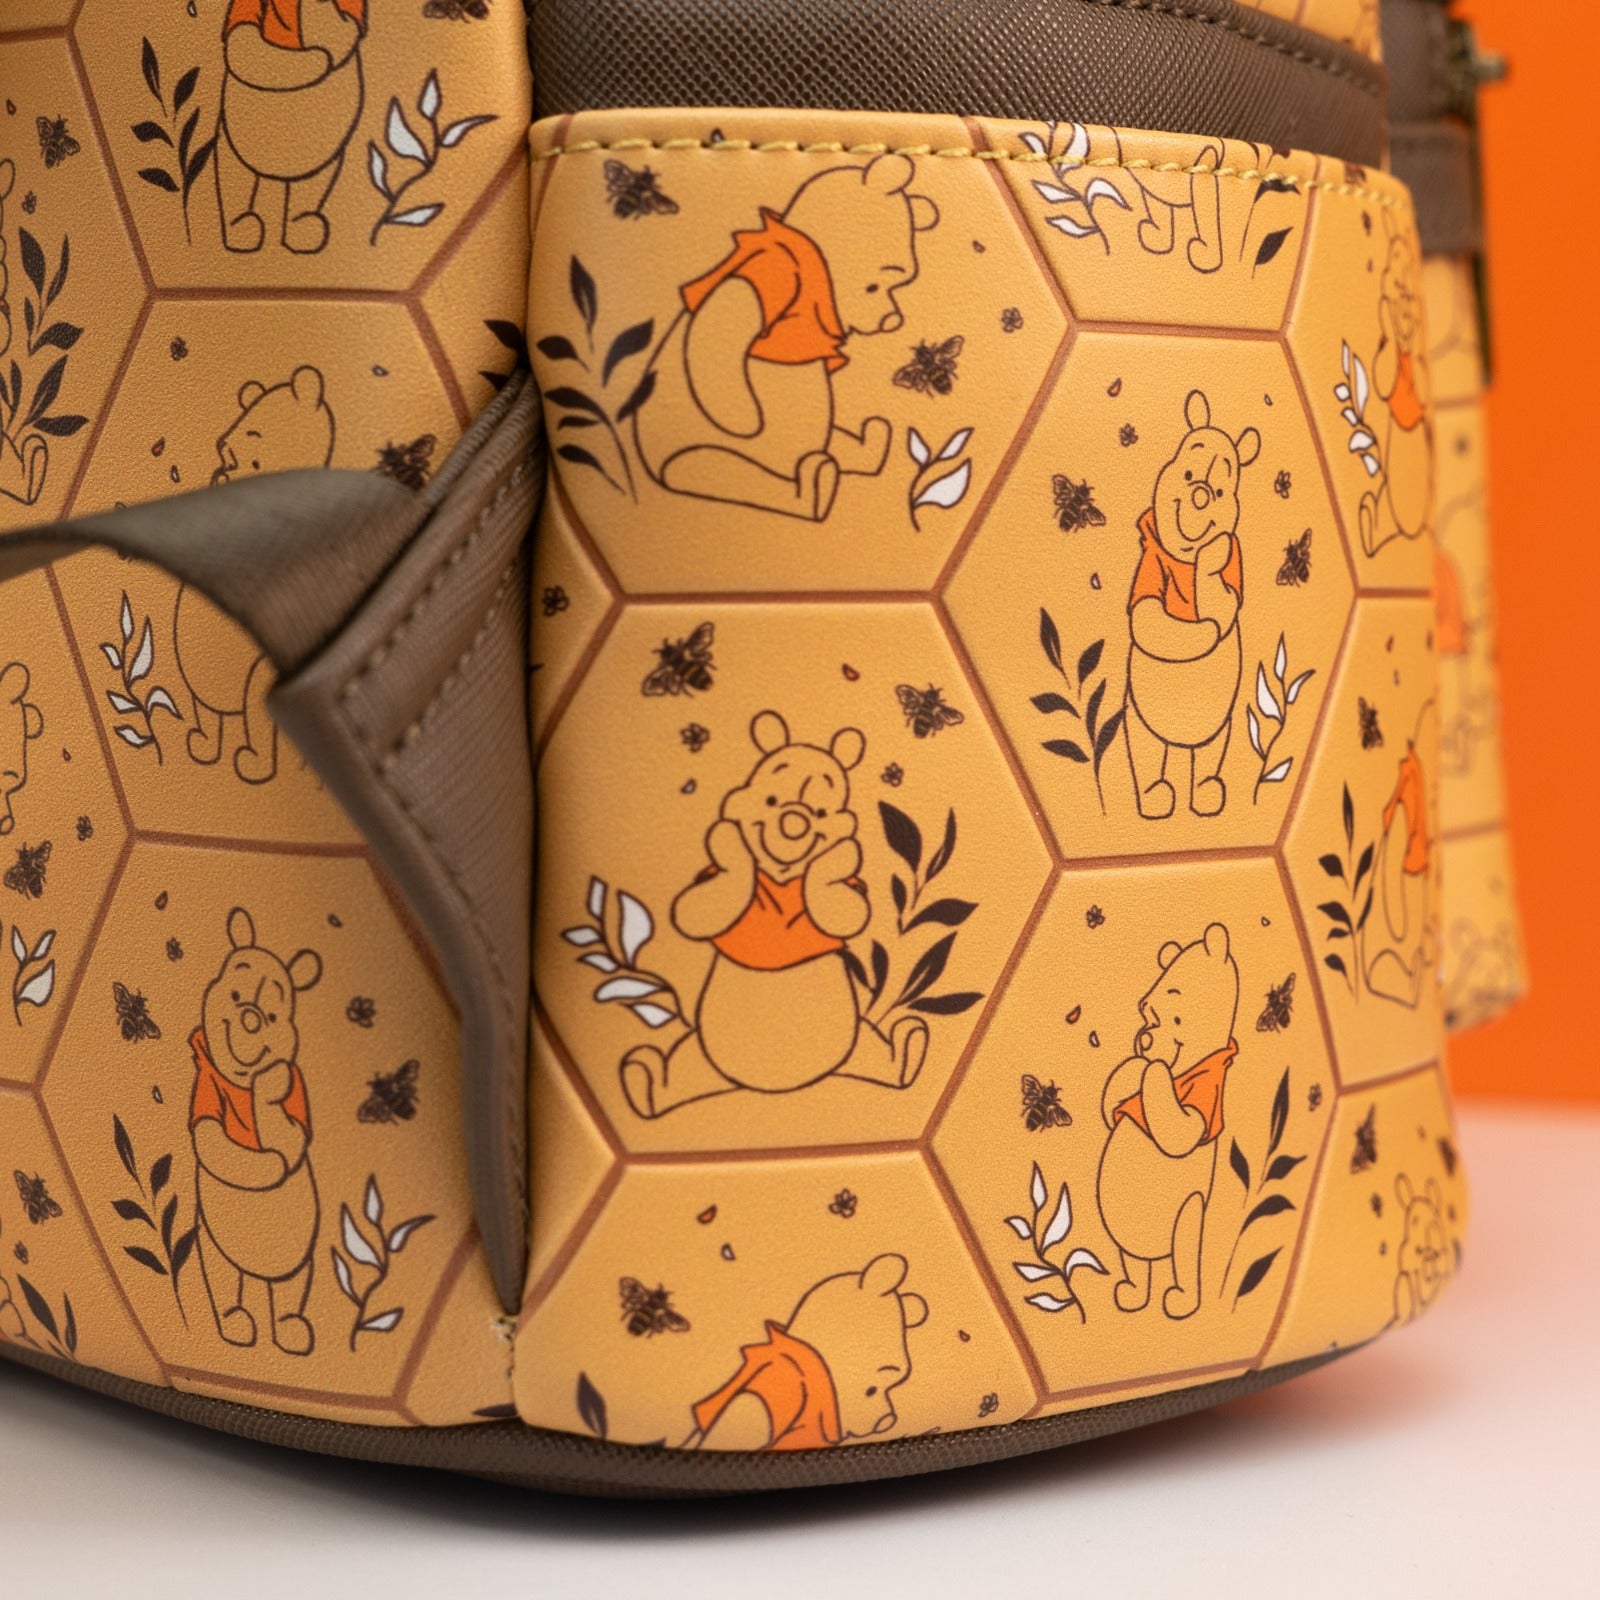 Loungefly x Disney Winnie the Pooh Honeycomb Mini Backpack